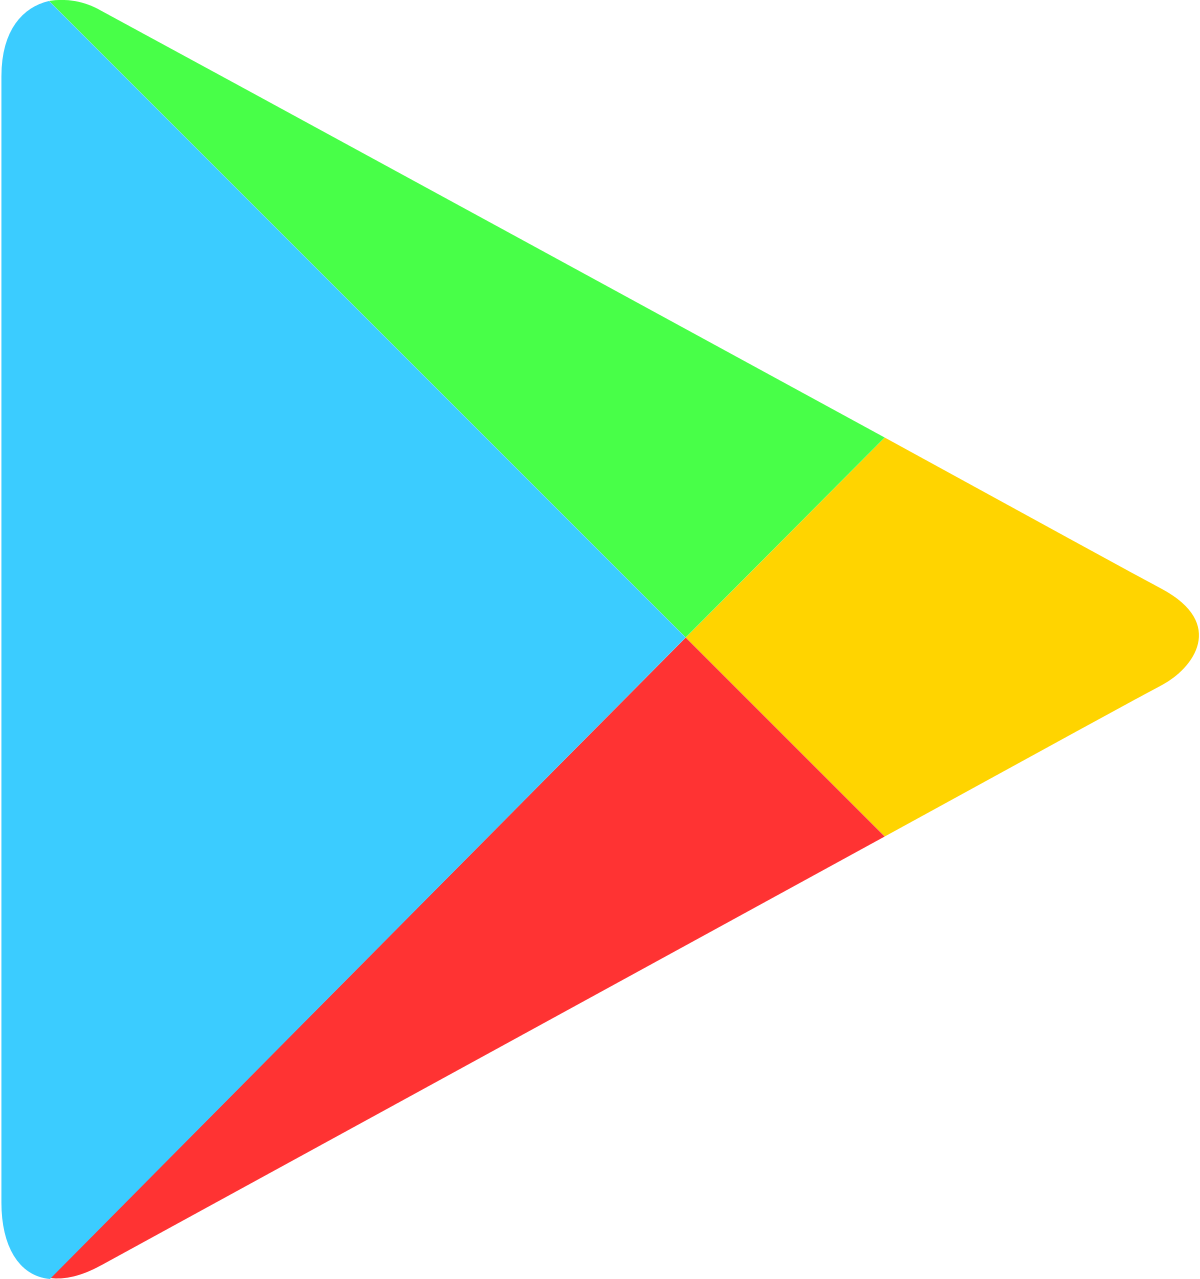 Logo of Google Play Store